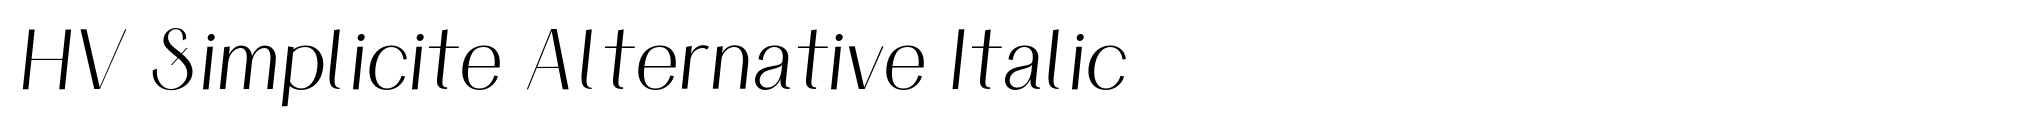 HV Simplicite Alternative Italic image